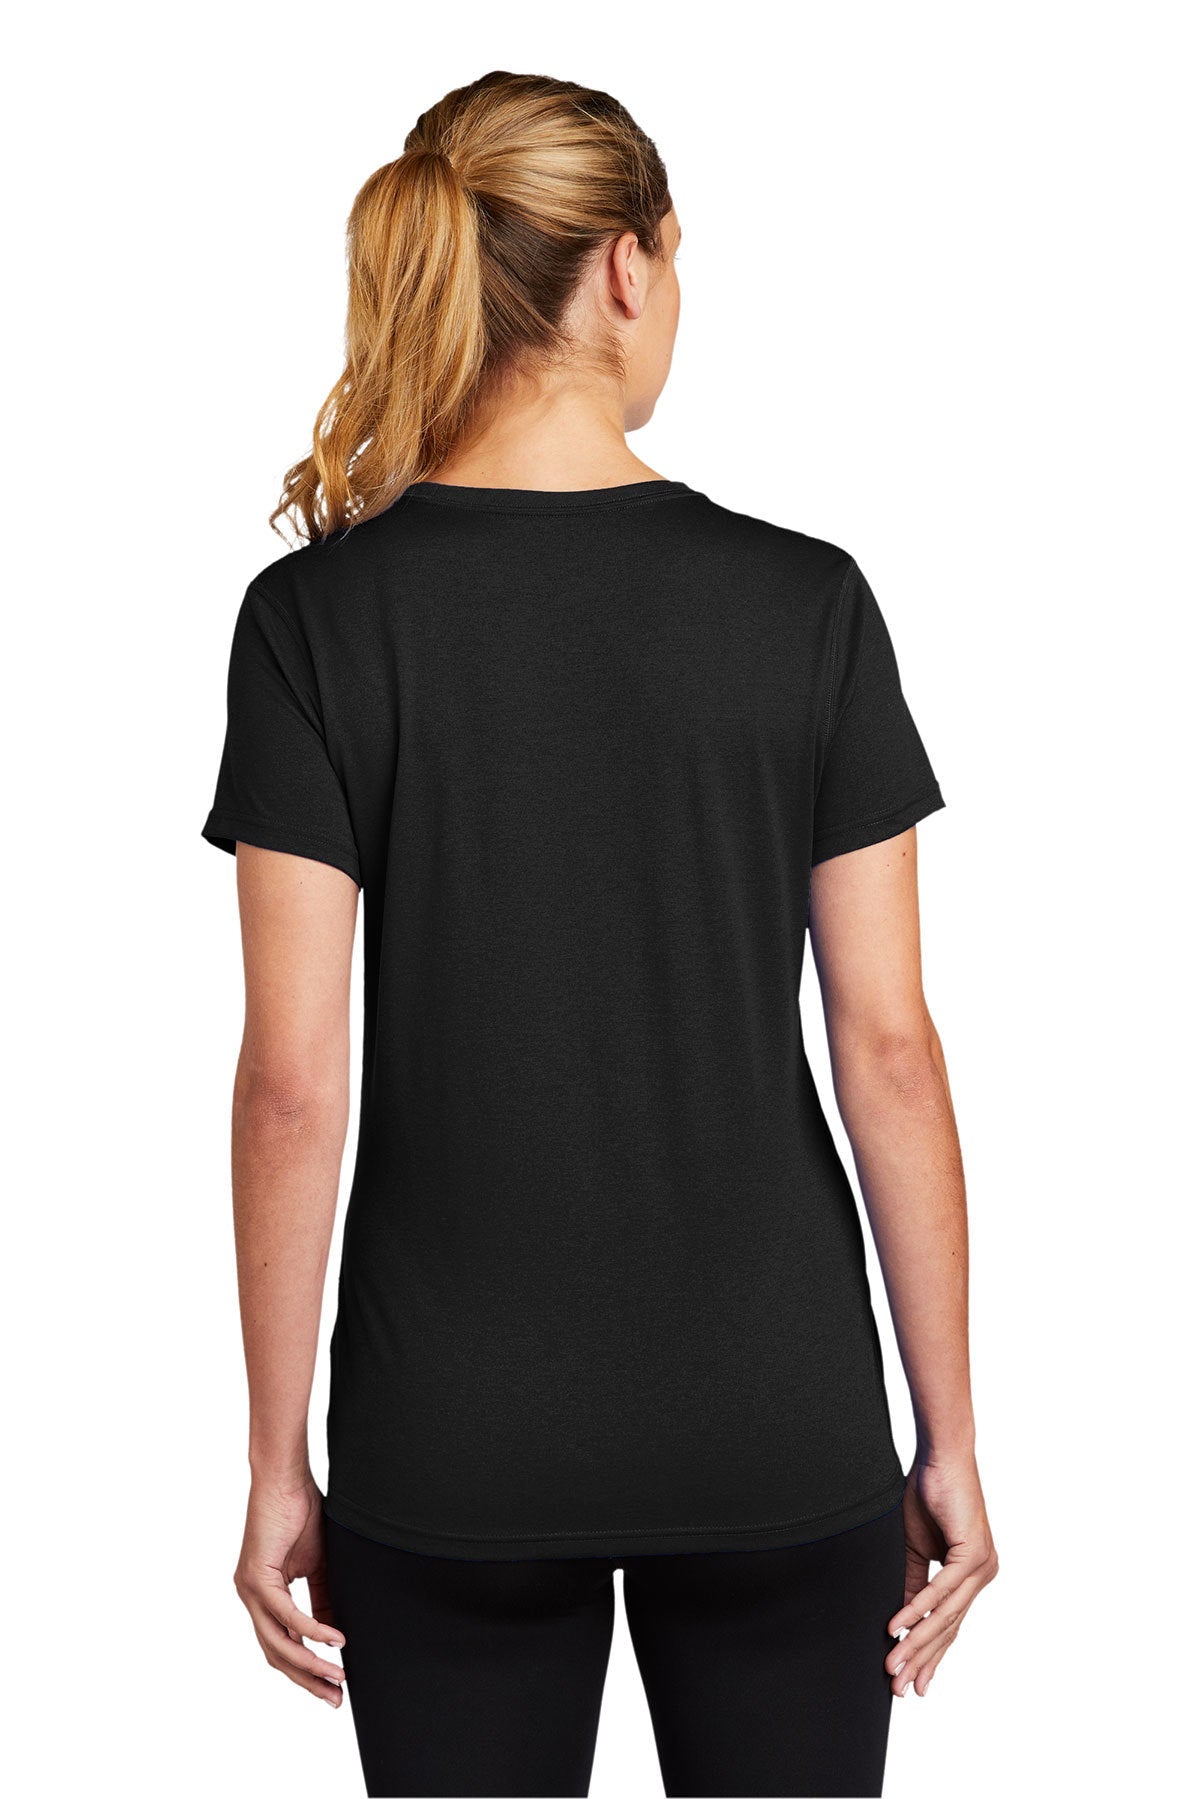 Nike Ladies Legend Customized T-Shirts, Black